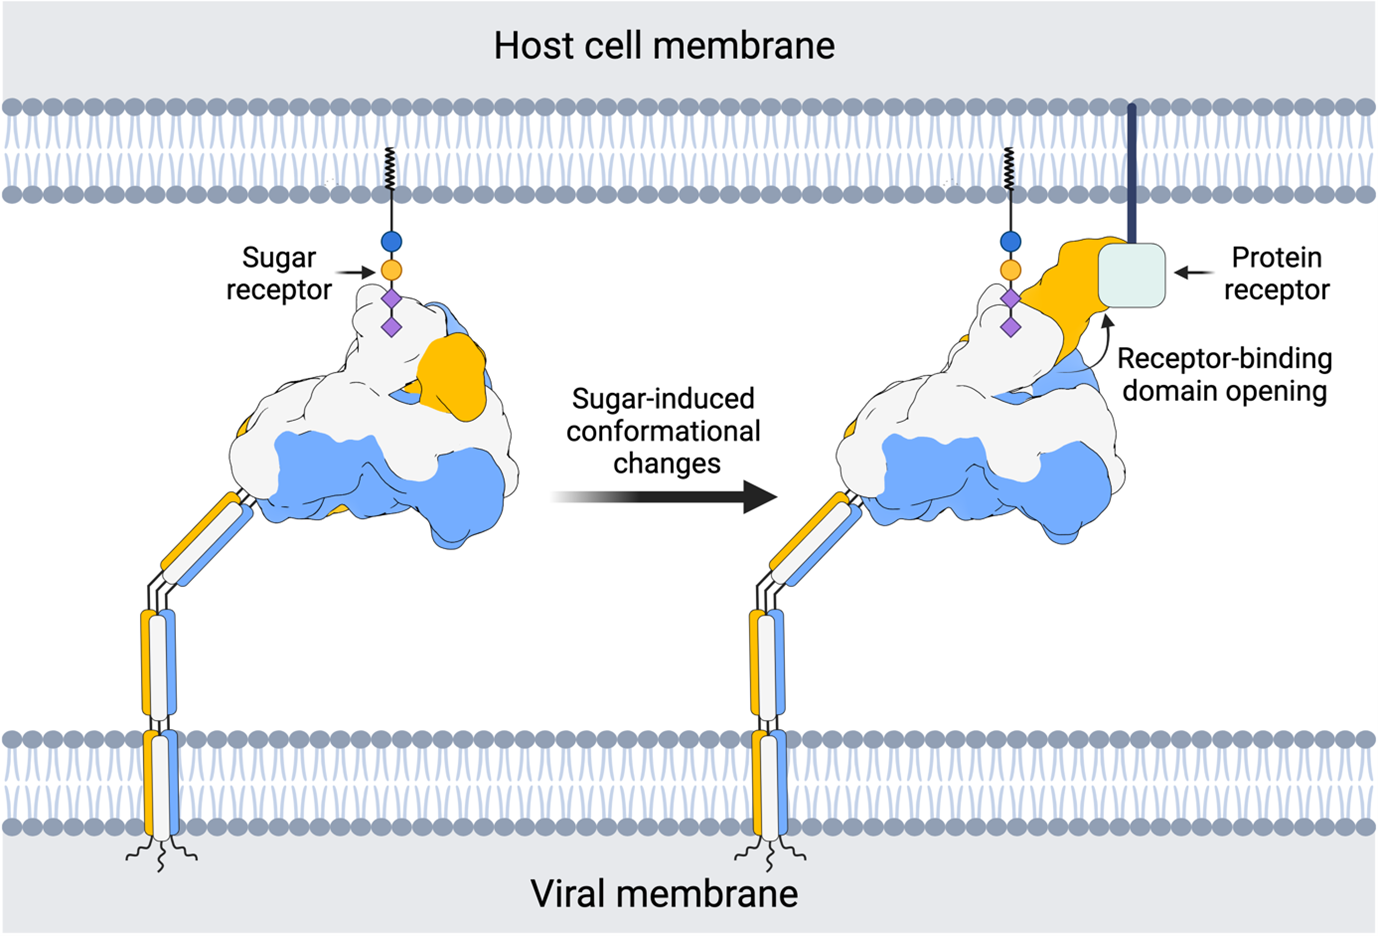 Host cell membrane, viral membrane